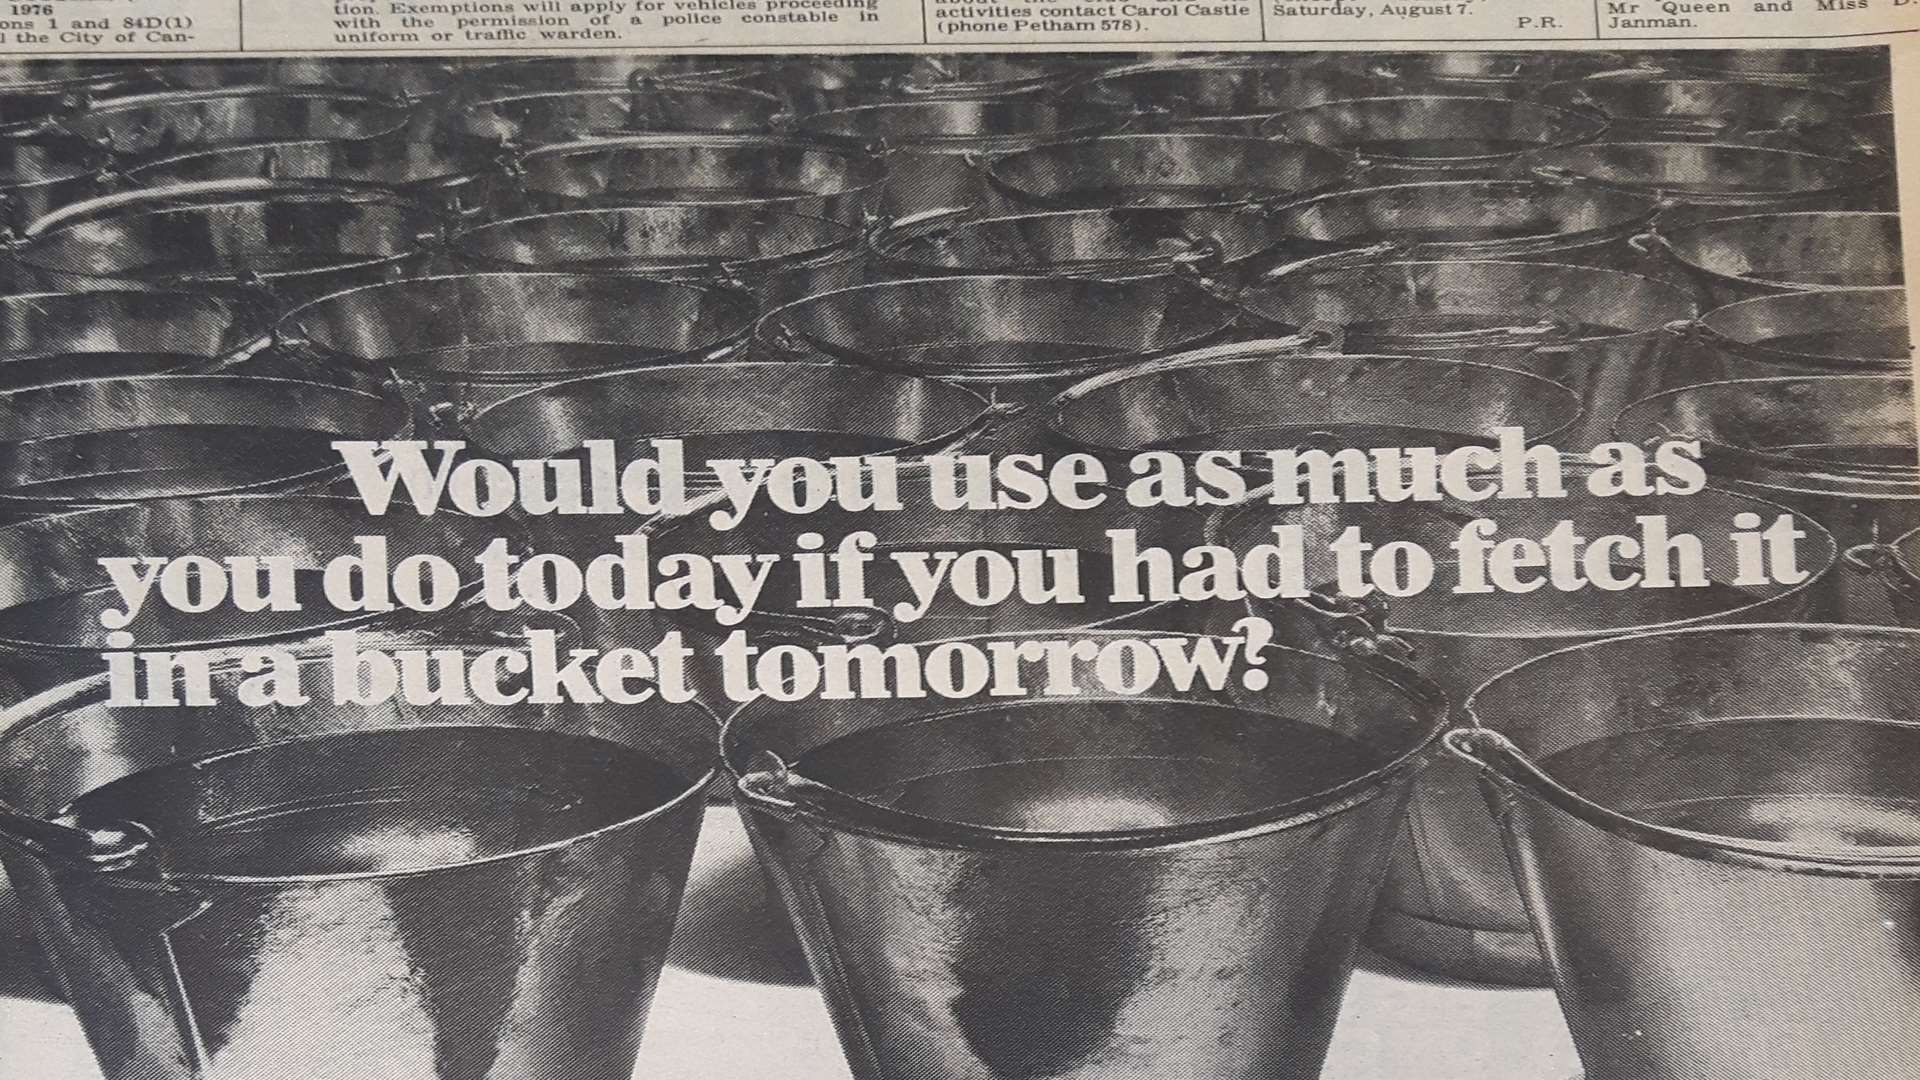 An advert in the Kentish Gazette in 1976